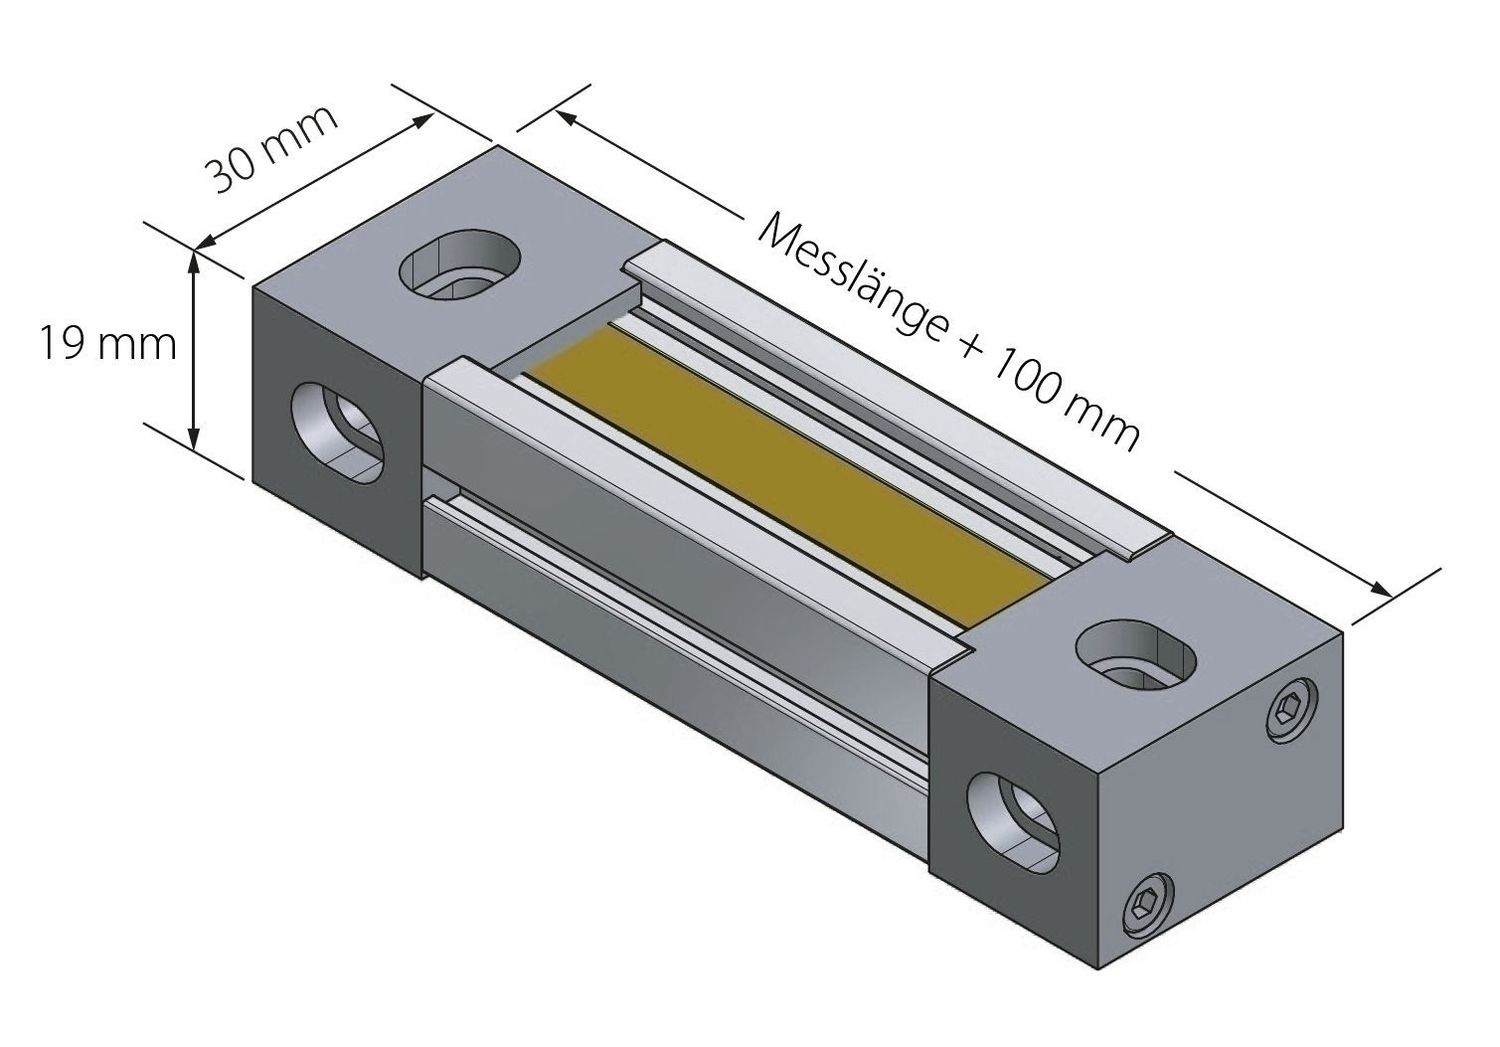 K+C Magnetmaßstab MS10A 1150 mm - 5 µm | Verfahrweg 1170 mm